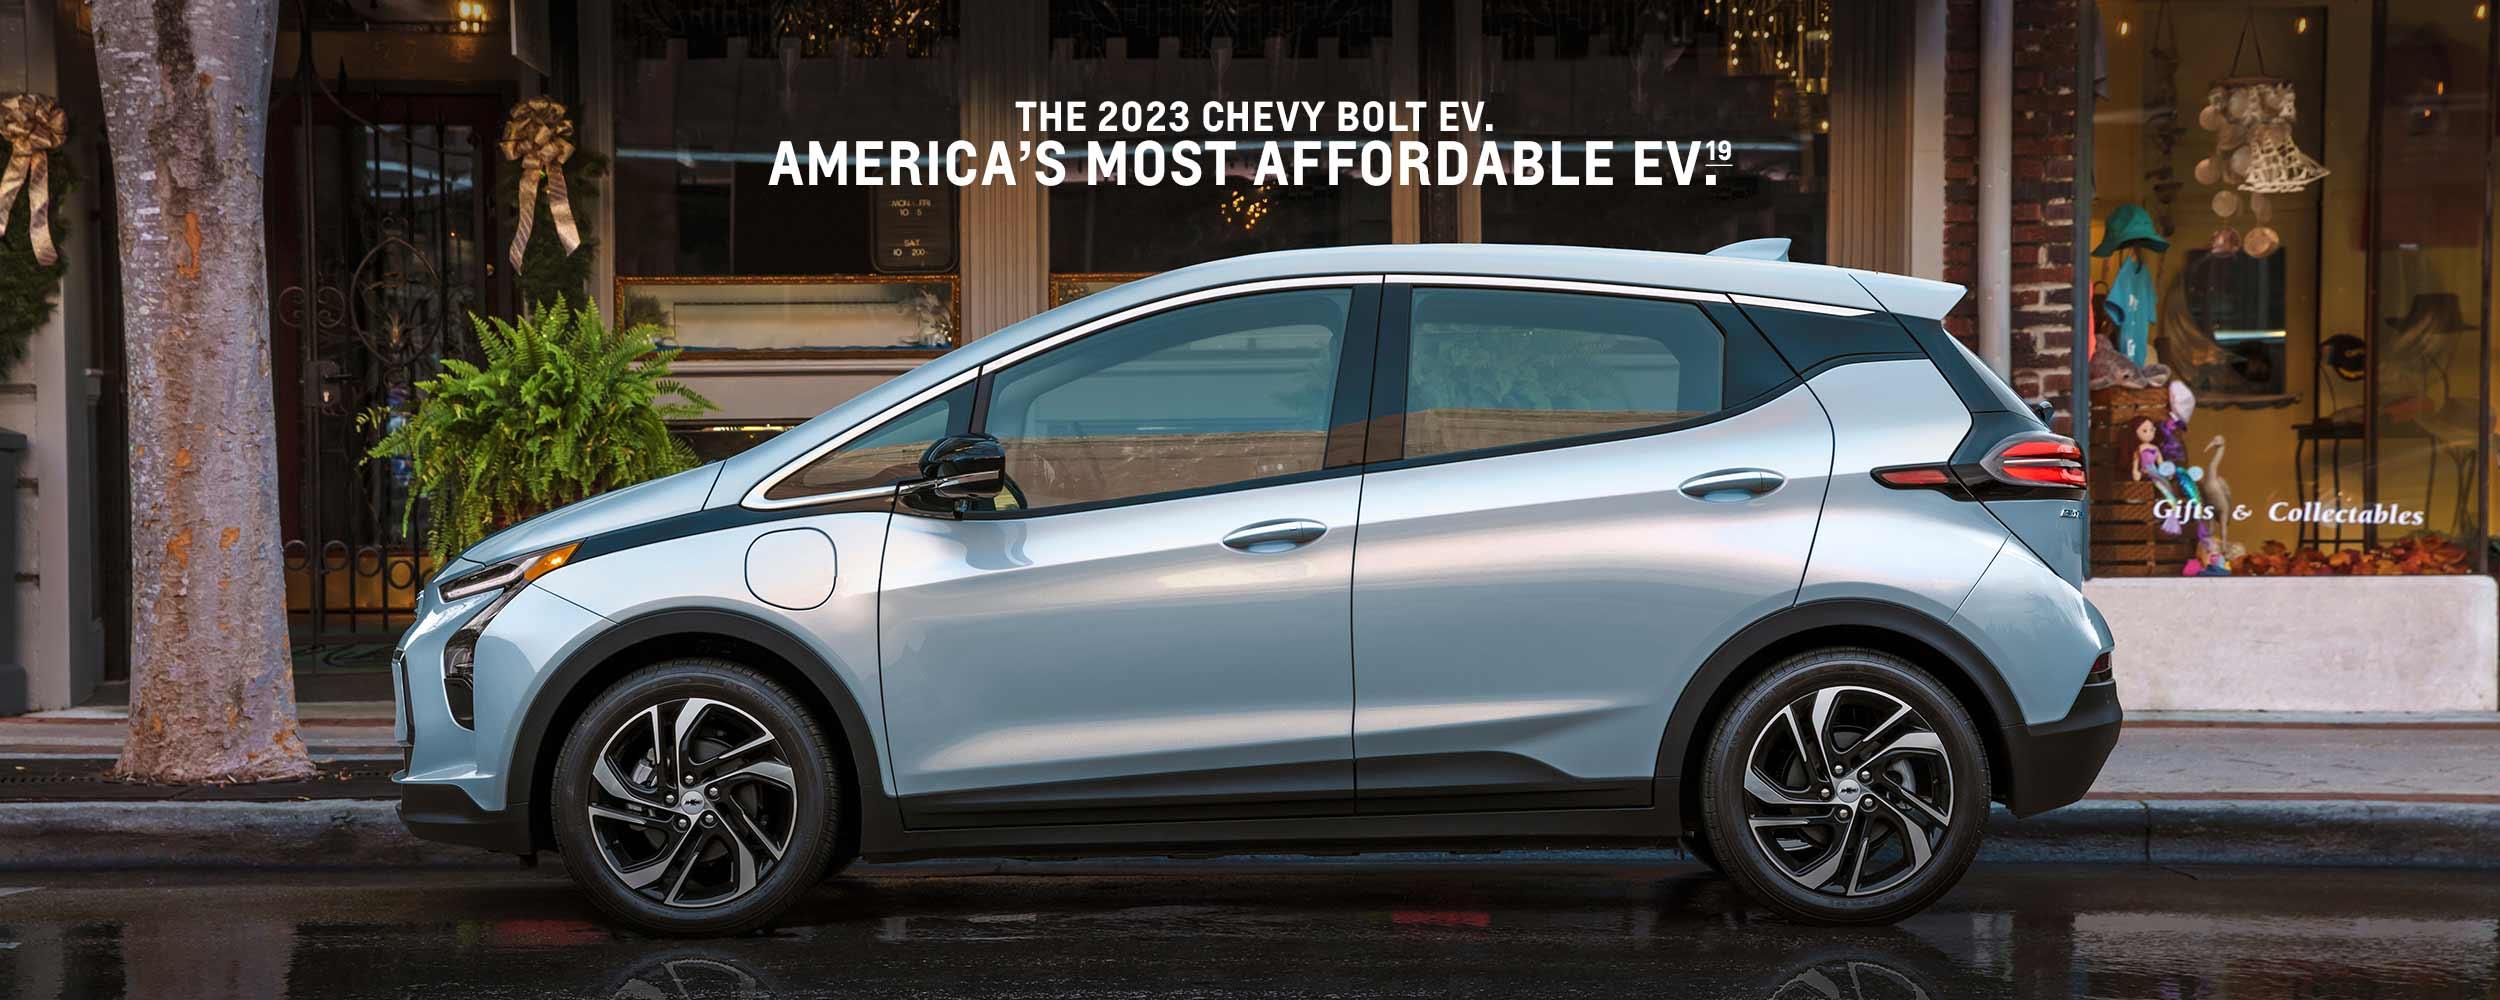 THE 2023 CHEVY BOLT EV